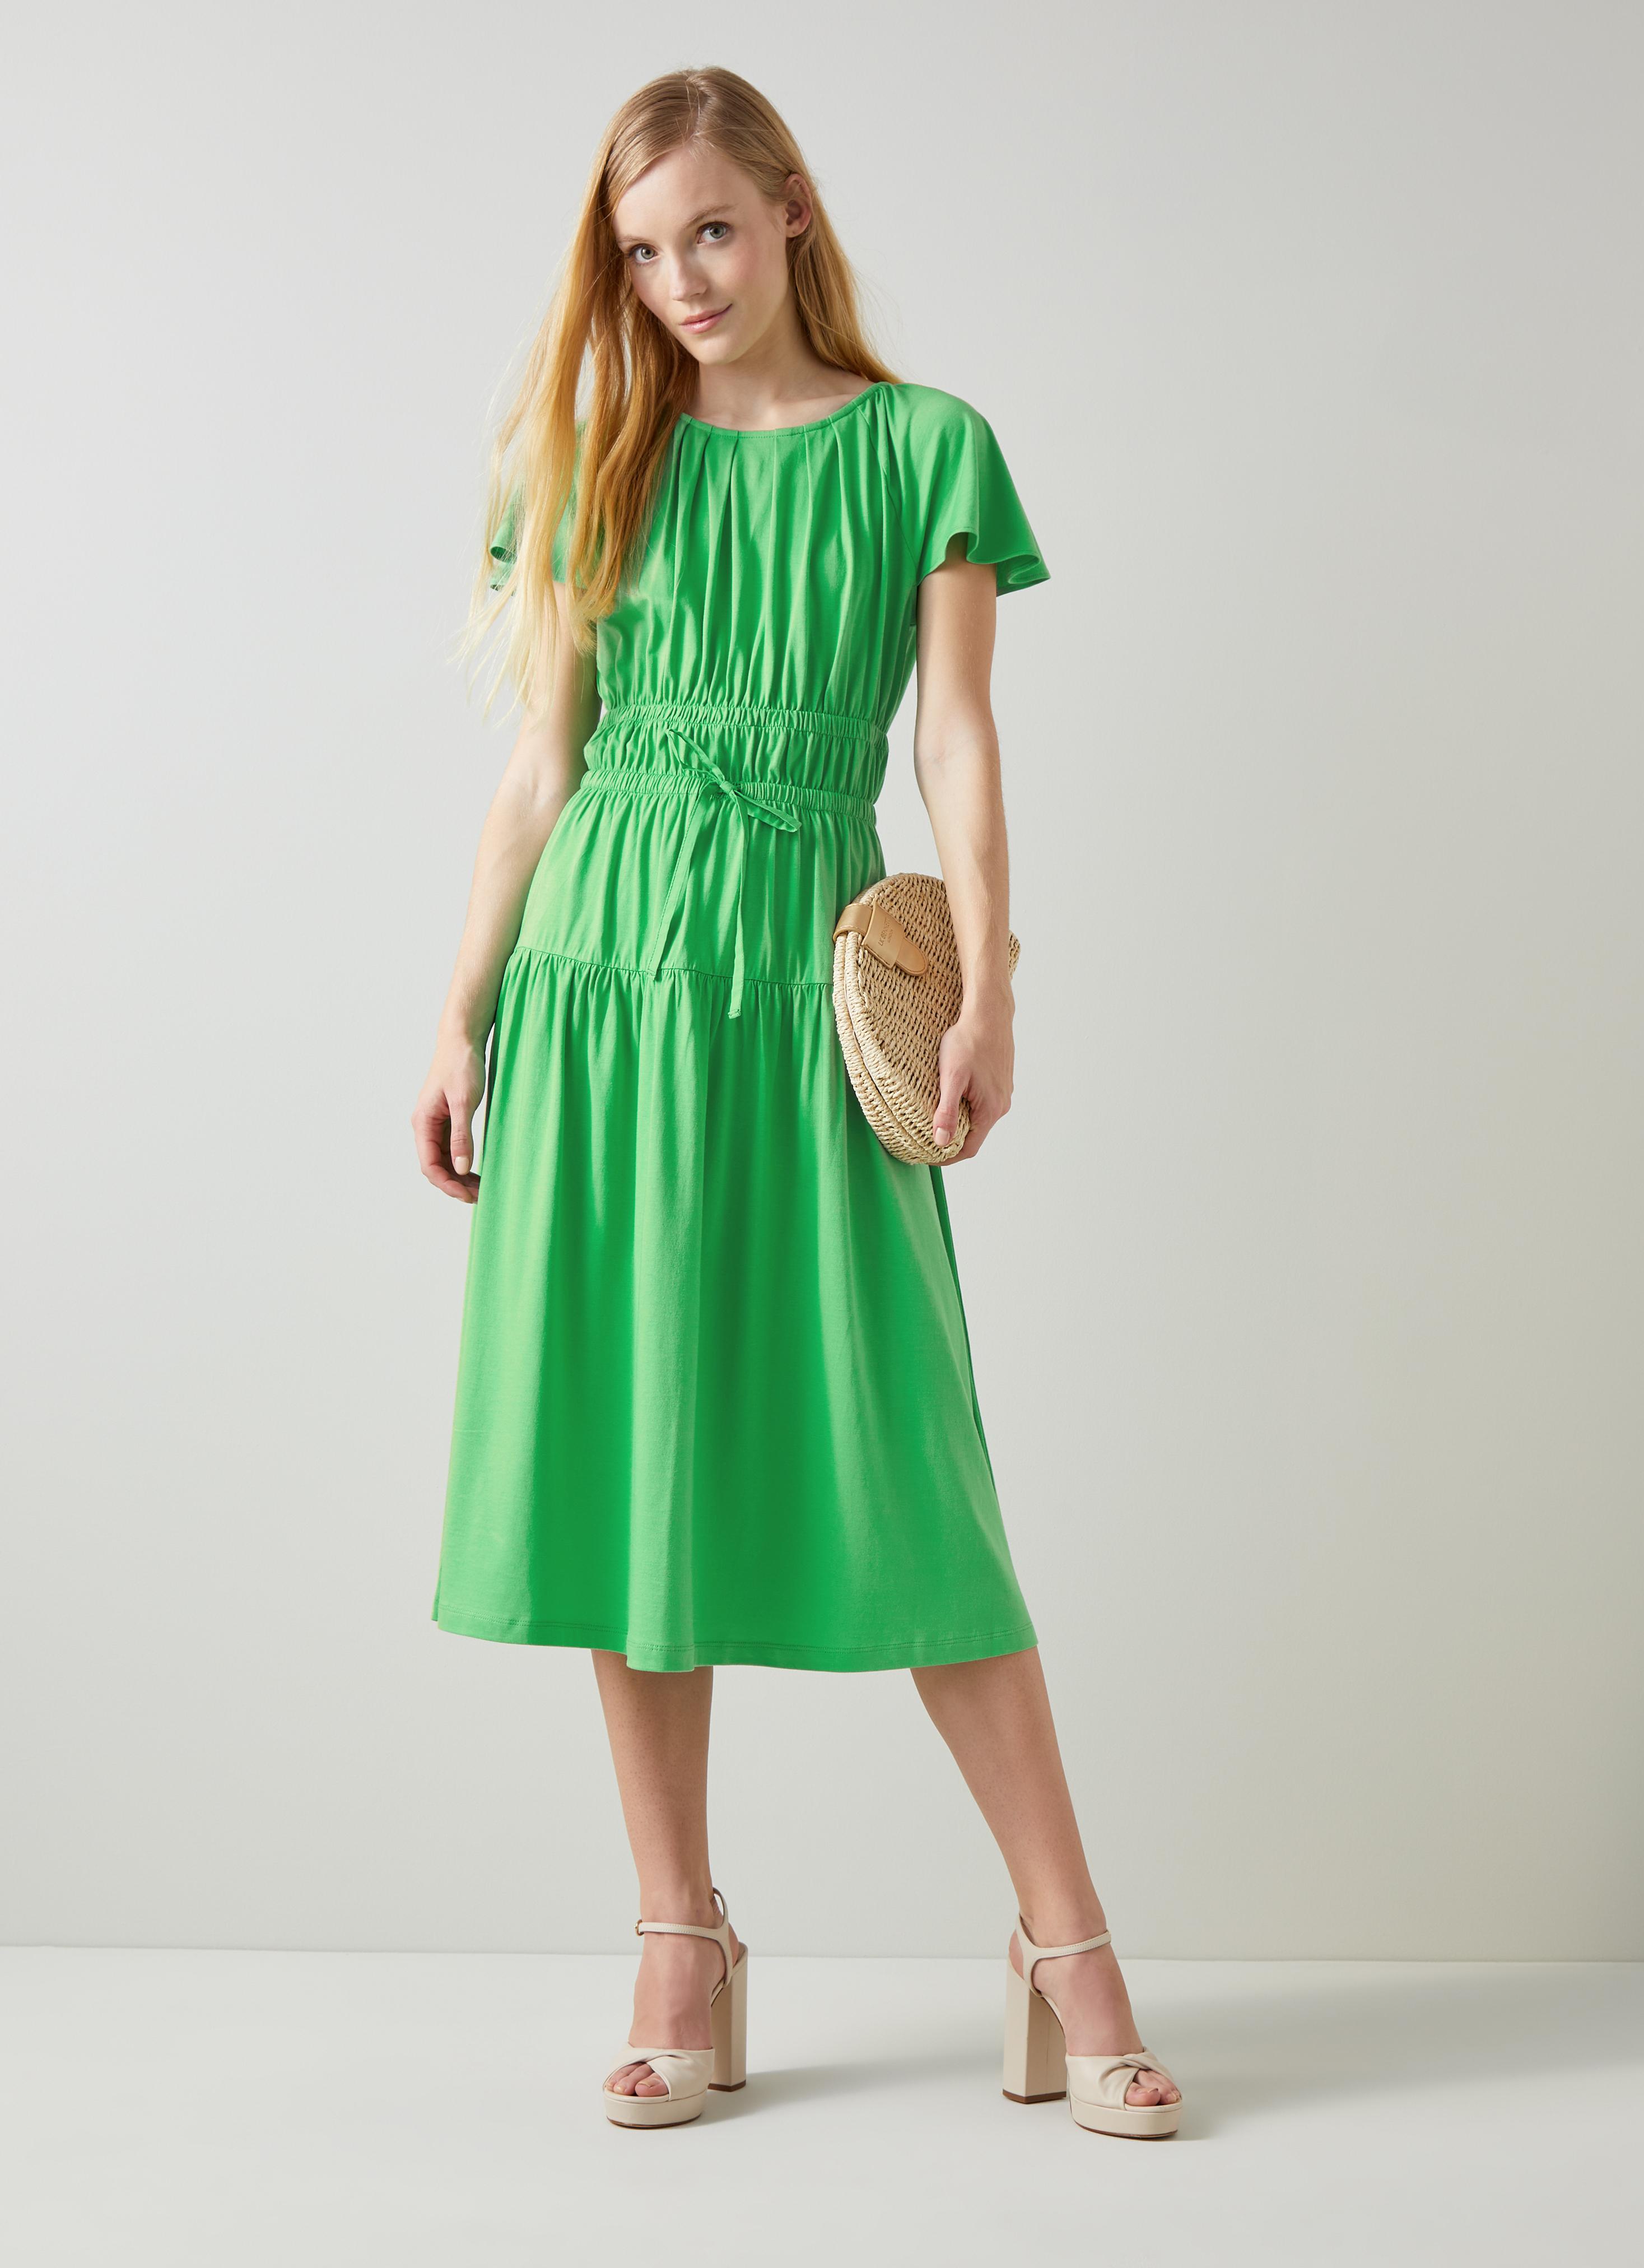 Chloe Green Cotton-Lenzing Ecovero Viscose Dress, Green